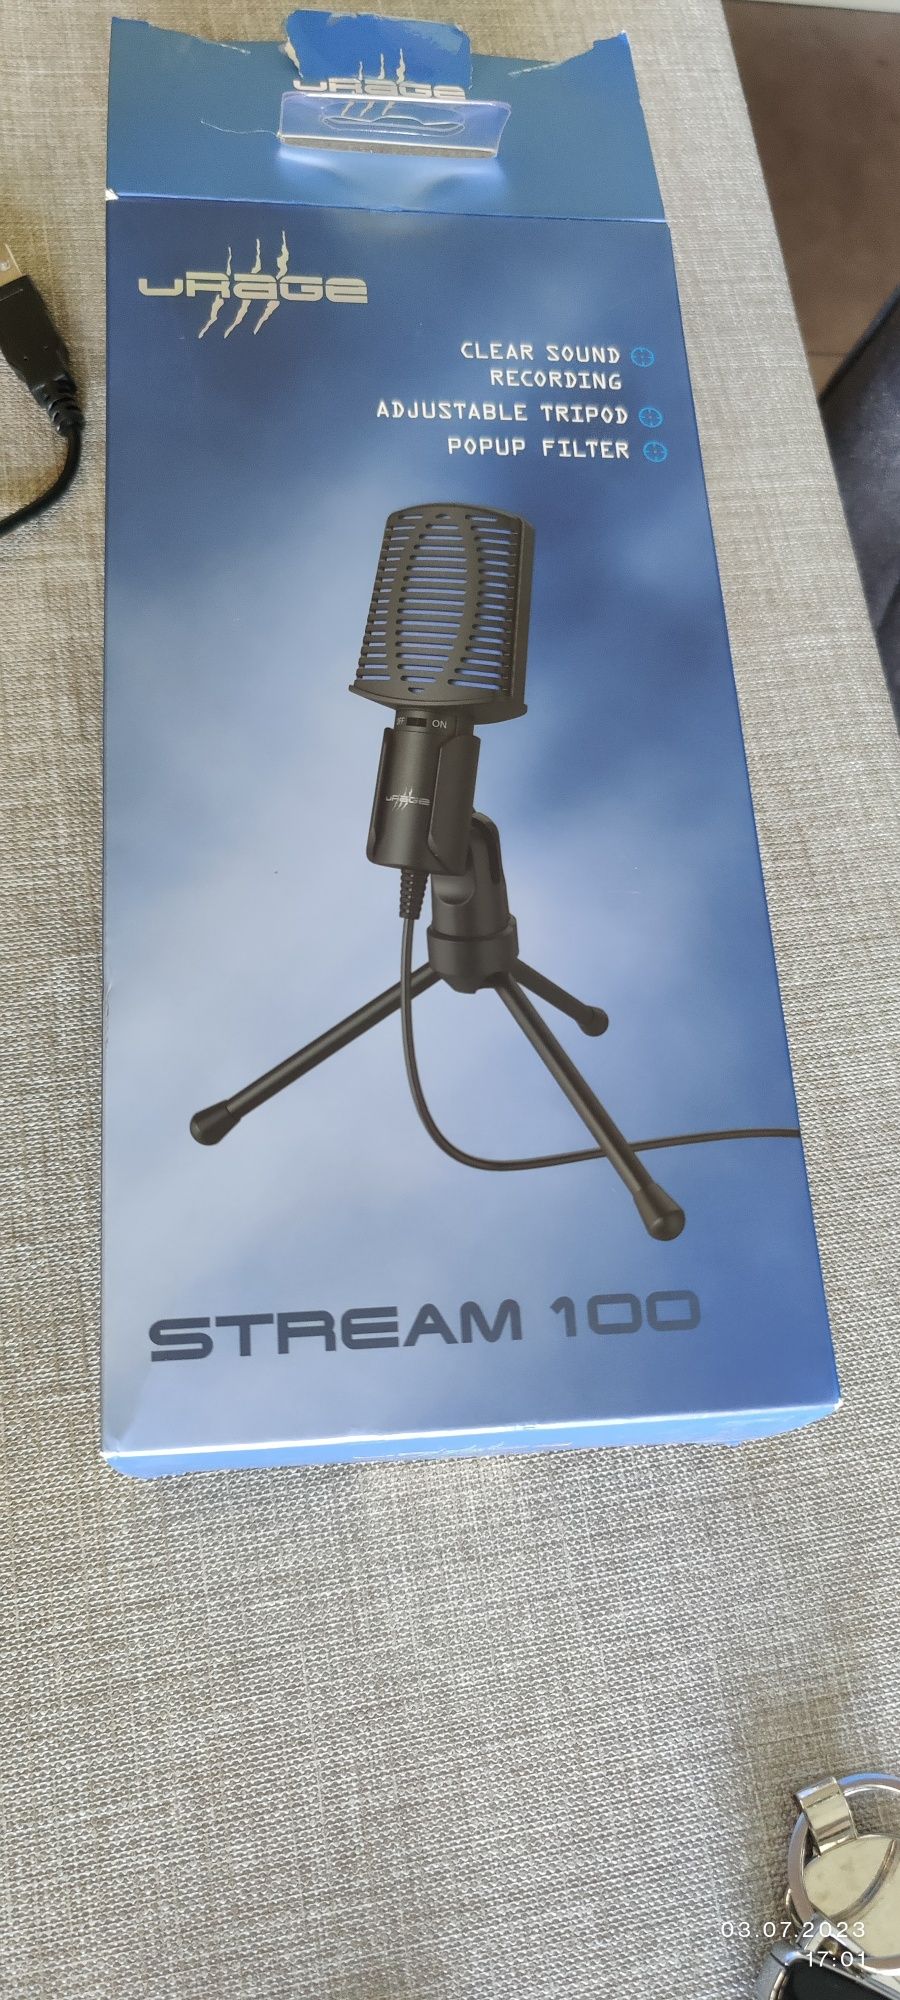 Microfon urage stream100